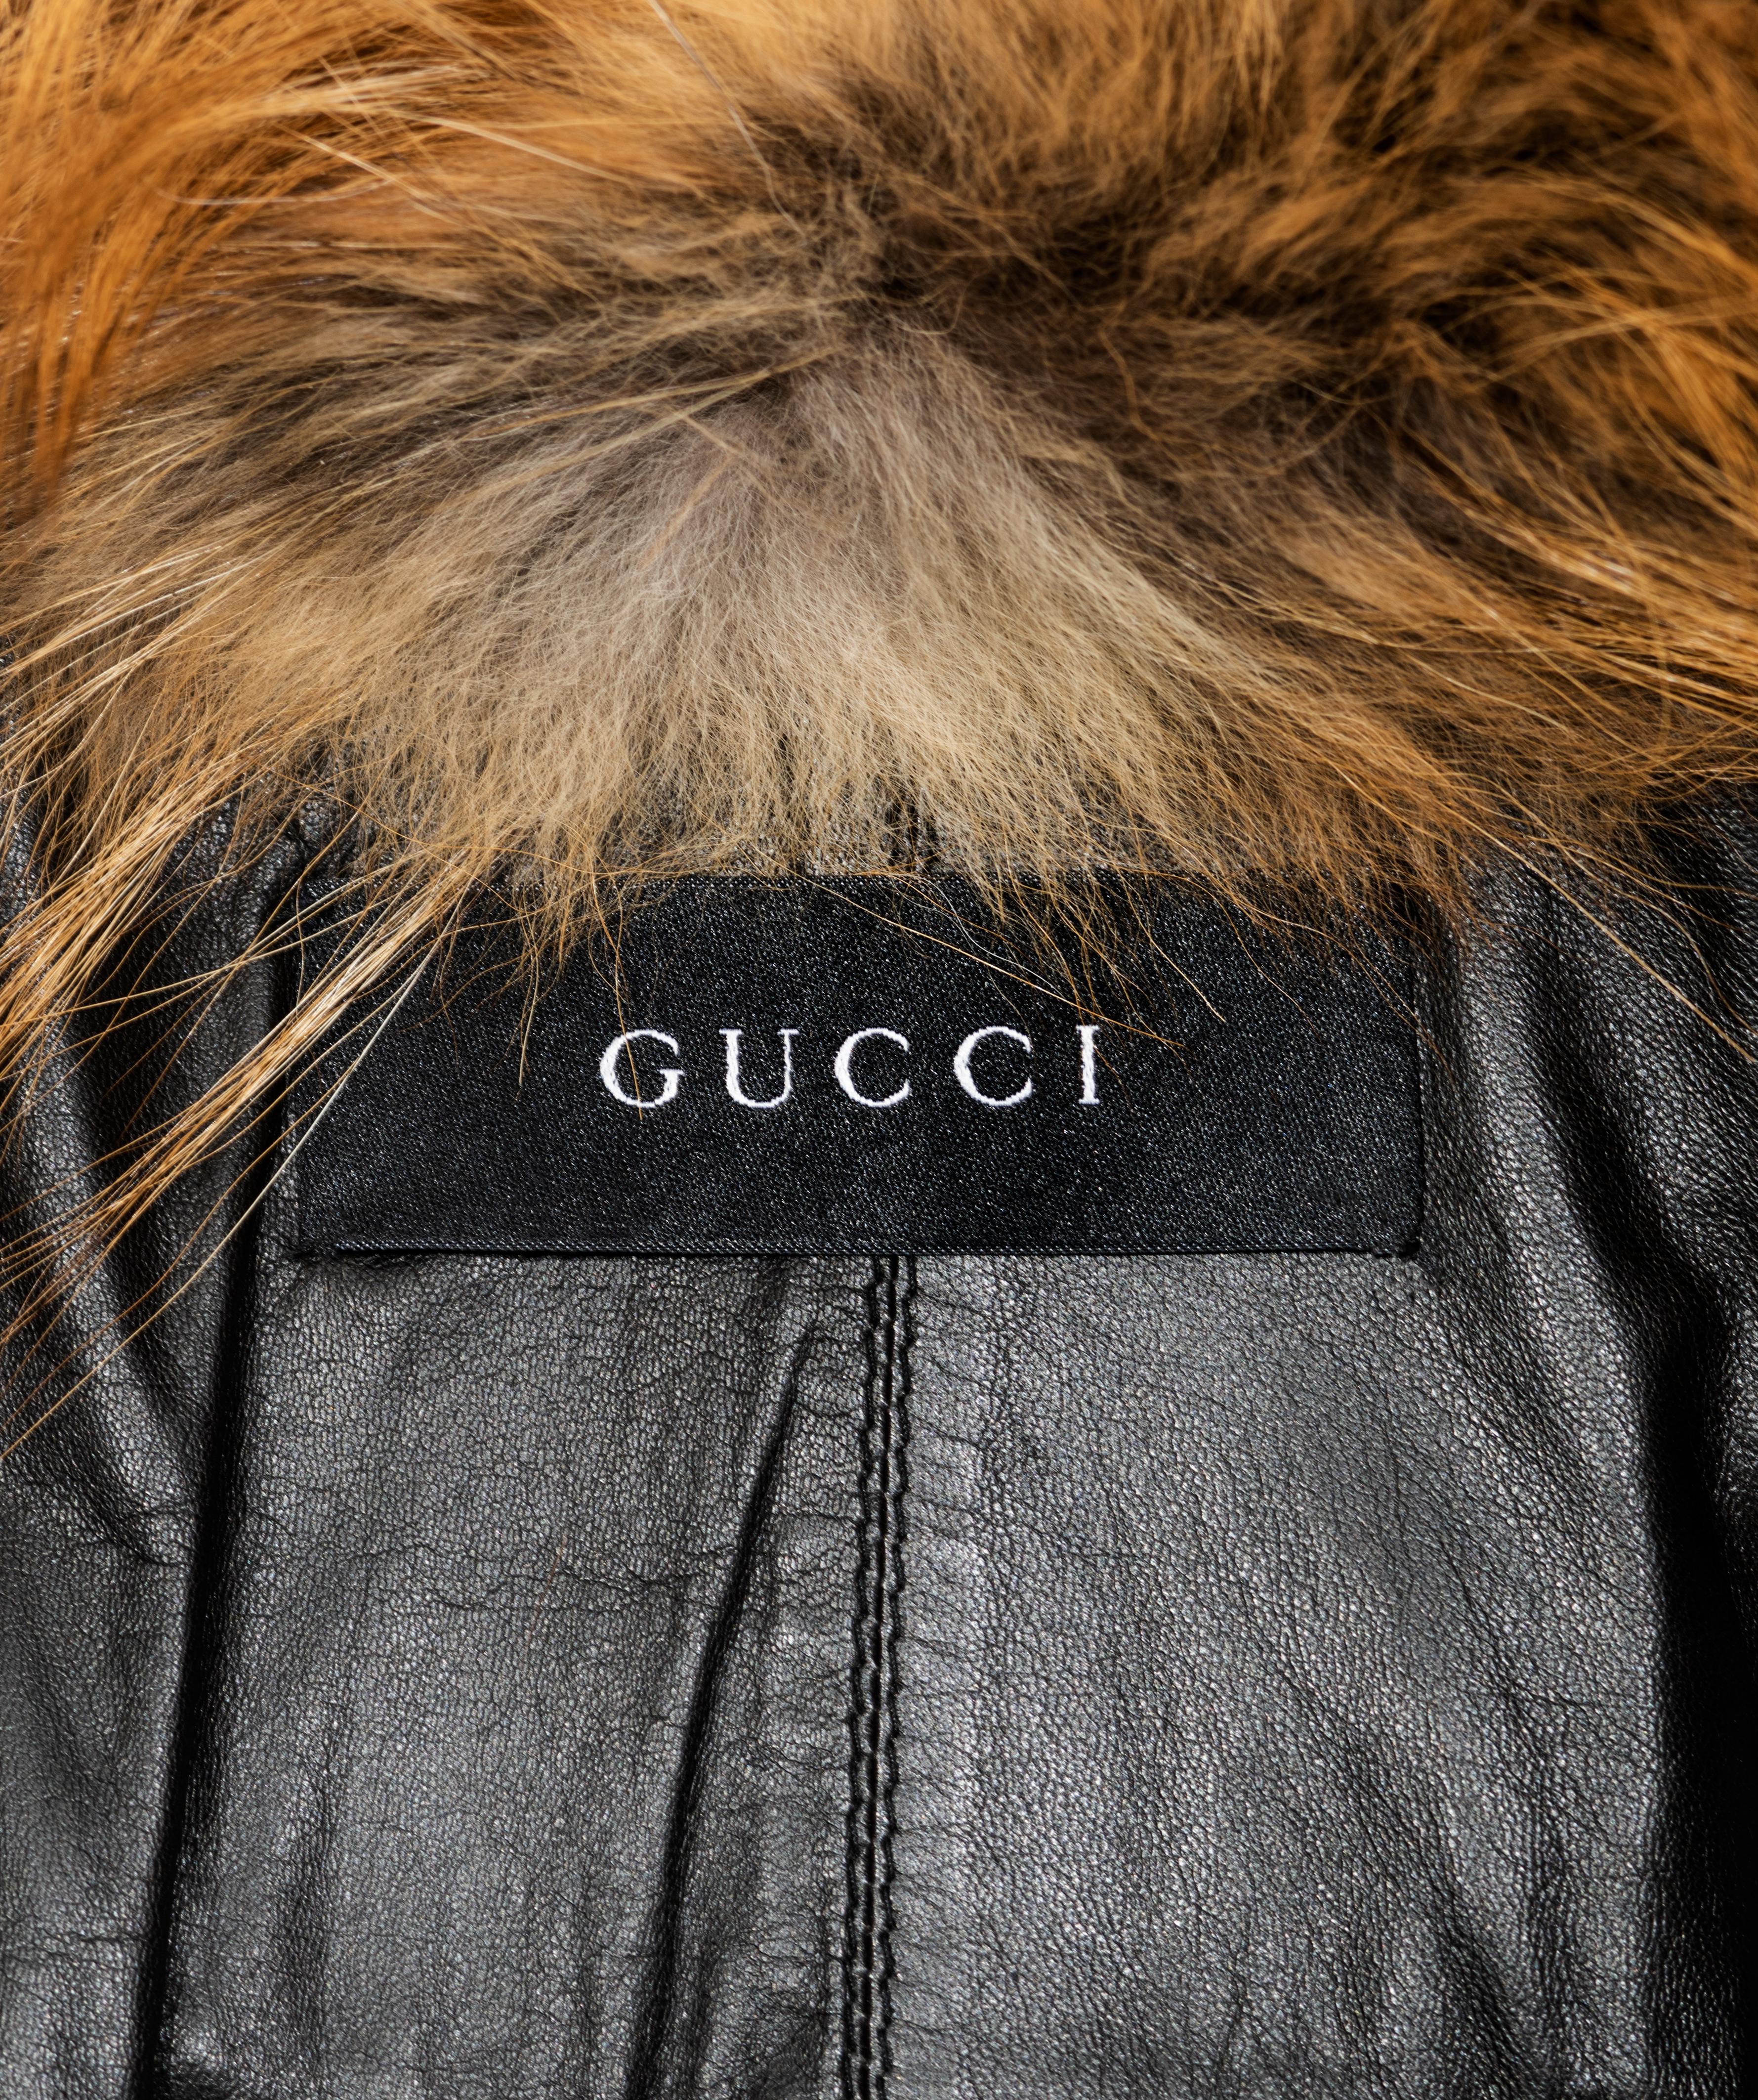 Gucci by Tom Ford fur jacket, fw 1999 3